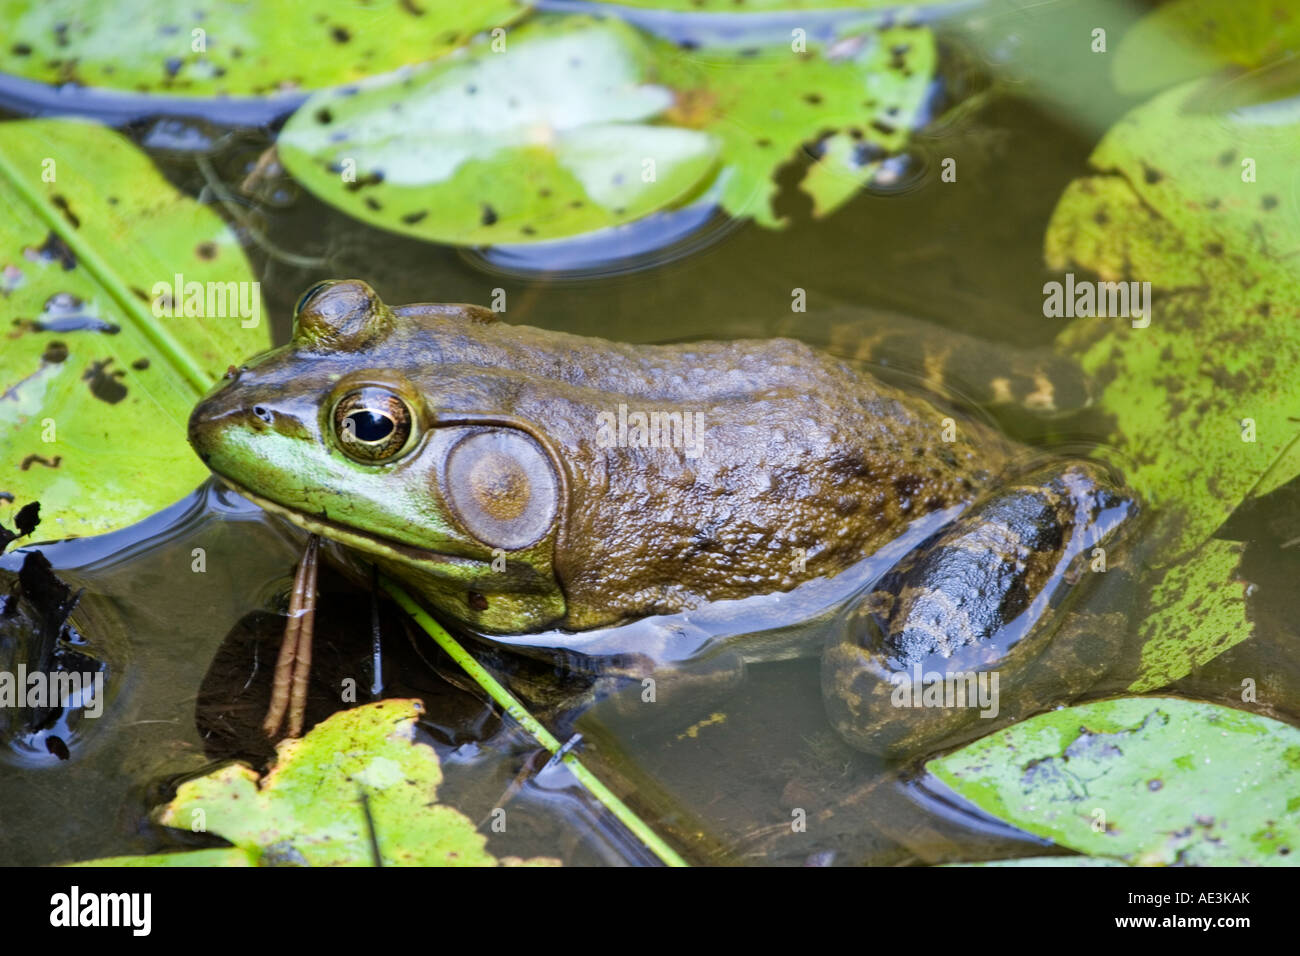 Bullfrog seduta metà immerso tra le ninfee Foto Stock